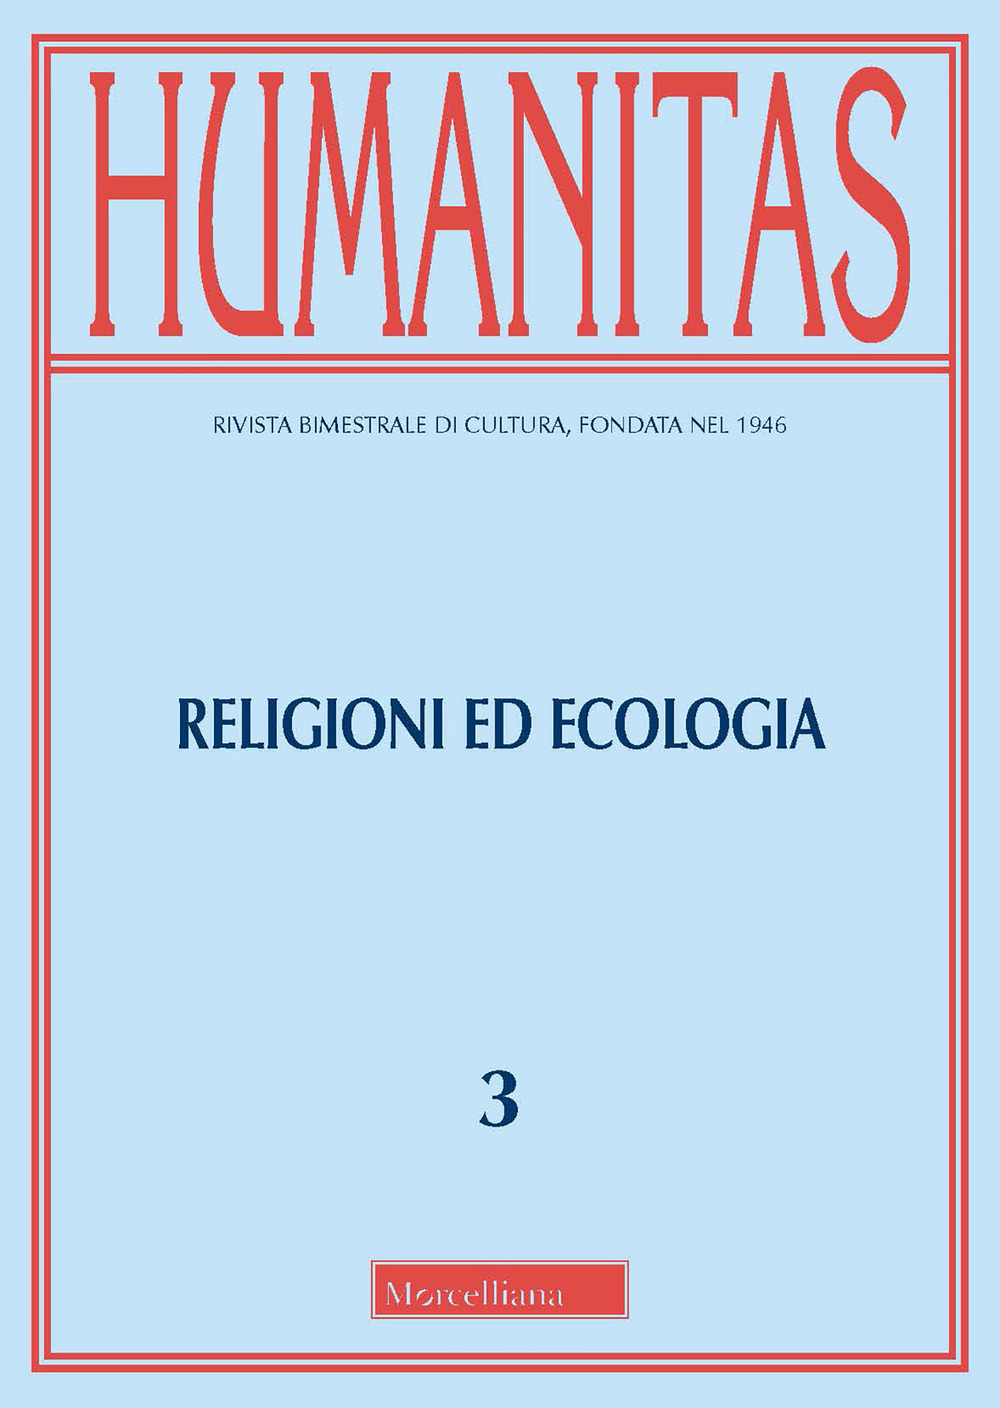 Image of Humanitas (2021). Vol. 3: Religioni ed ecologia.